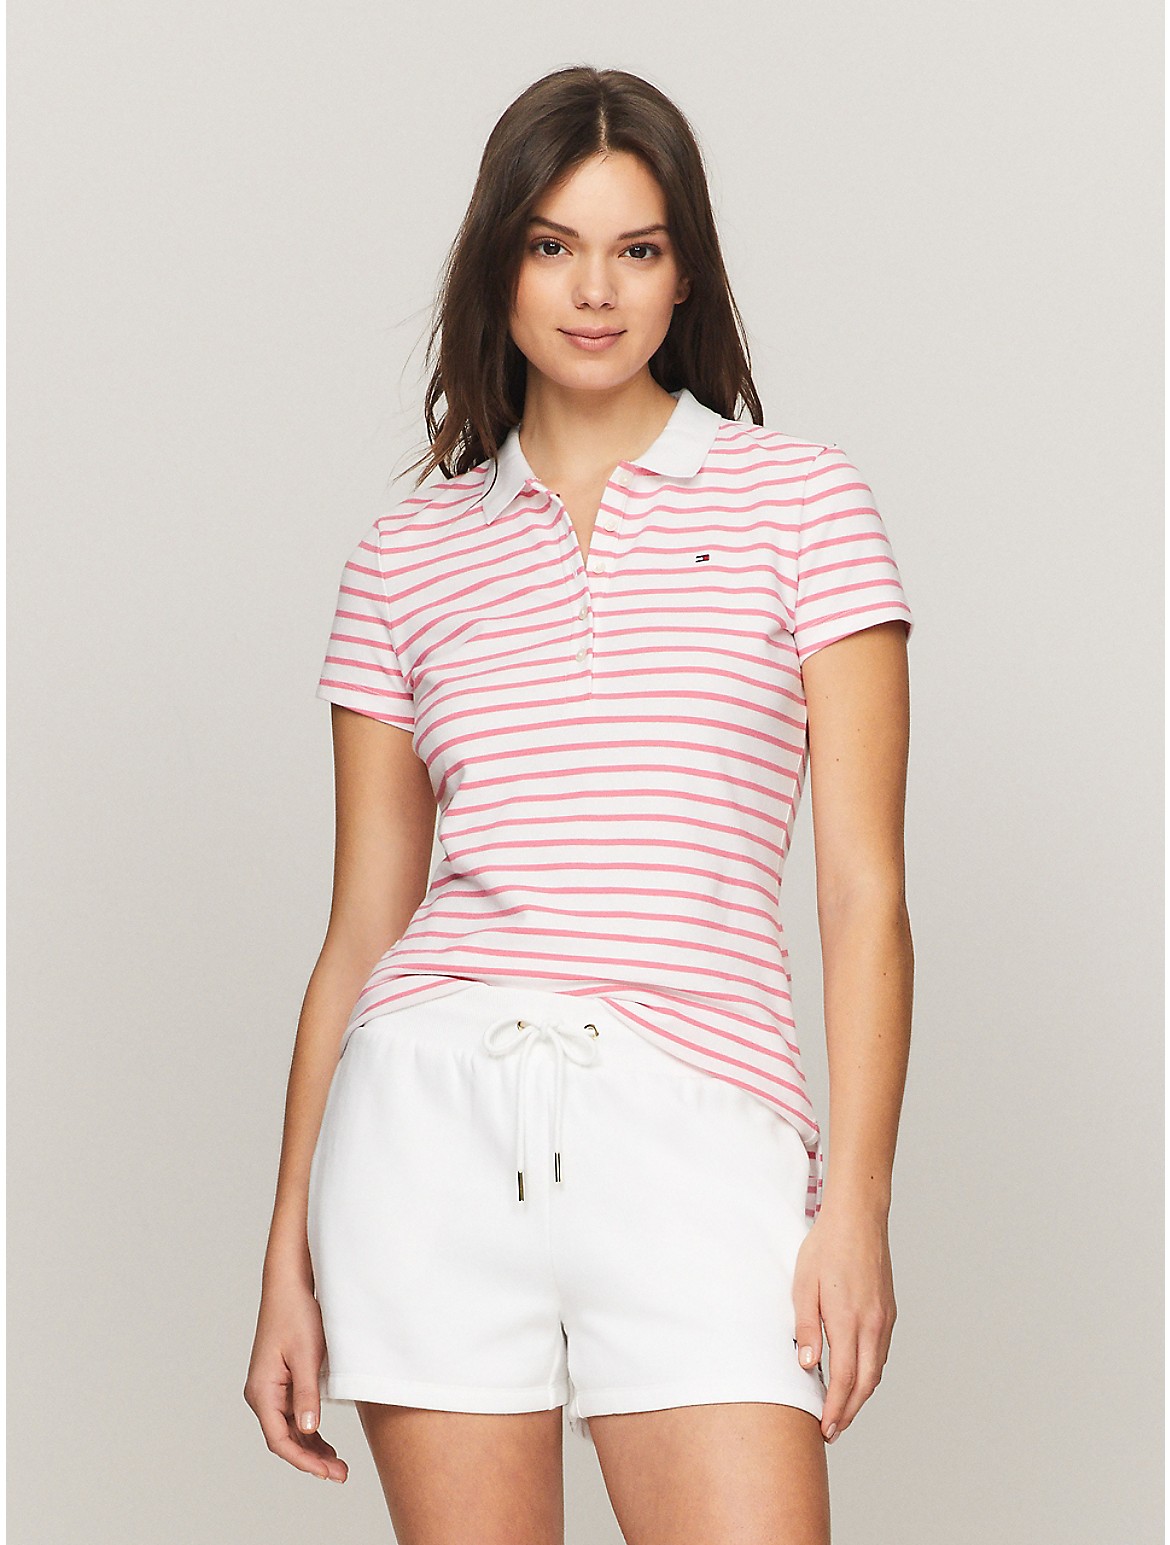 Tommy Hilfiger Women's Slim Fit Stripe Stretch Cotton Polo